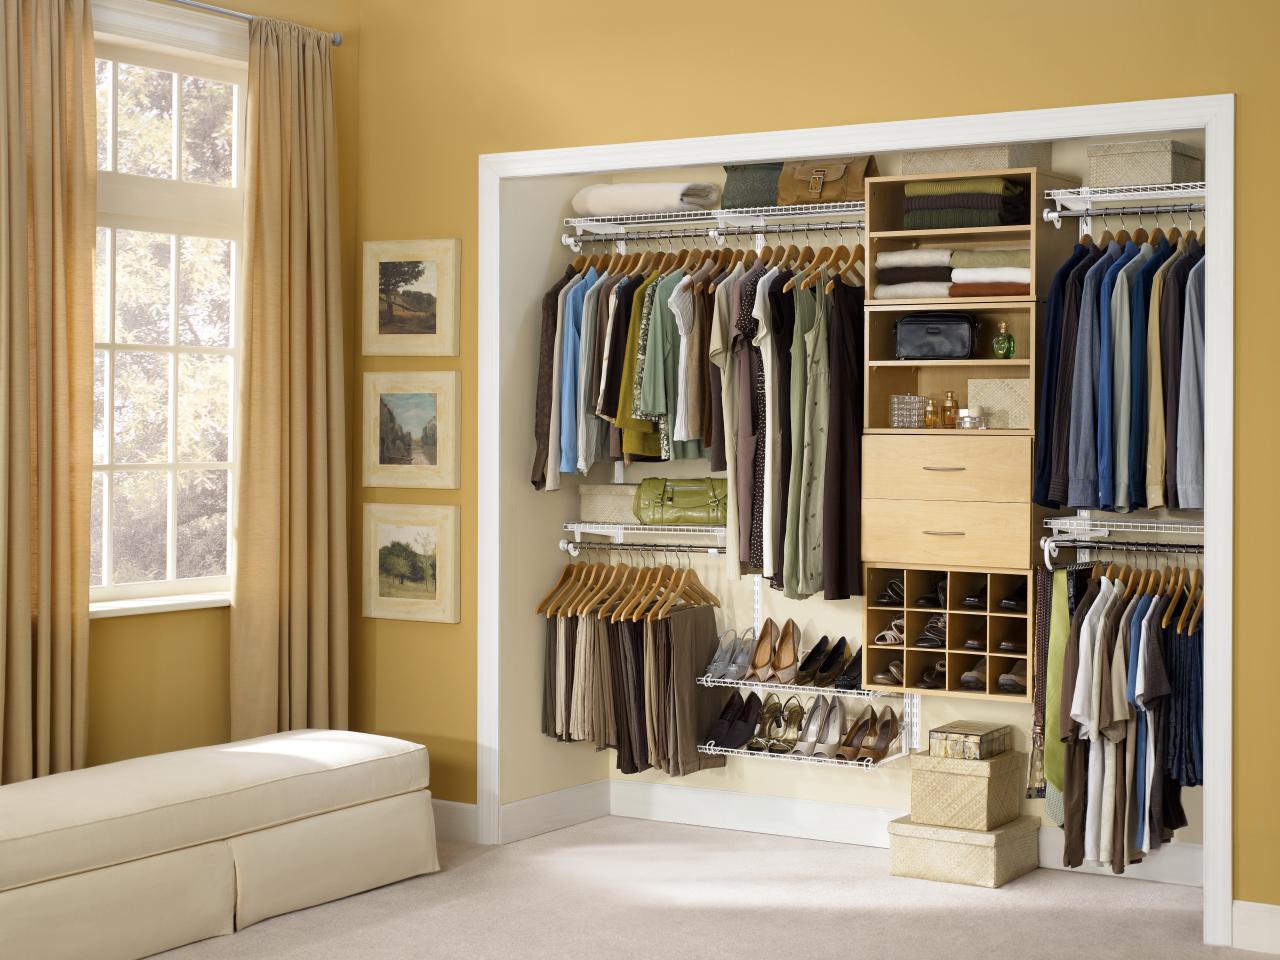 Designing the Right Closet Layout | HGTV